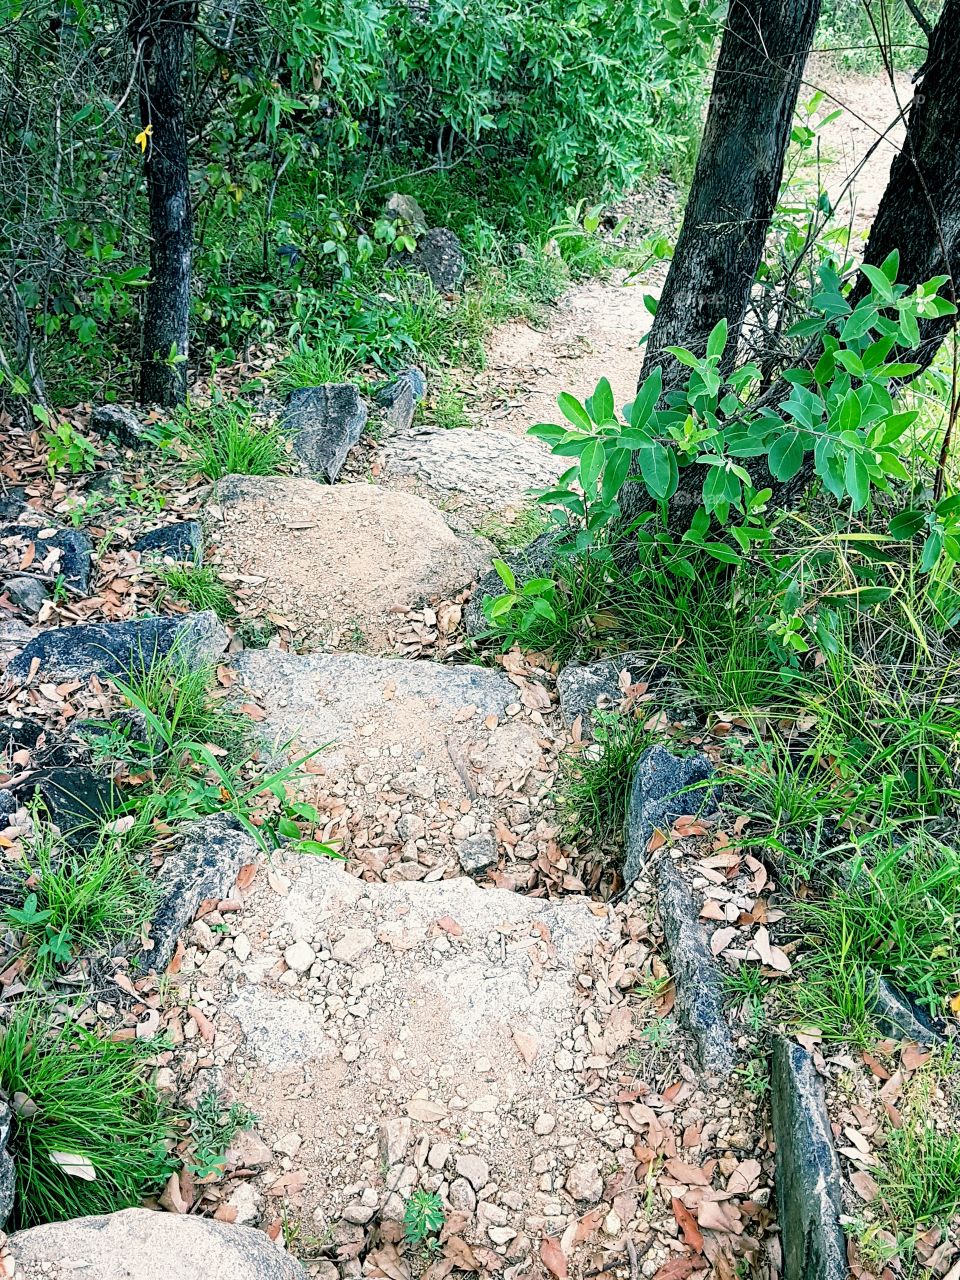 Follow the trail